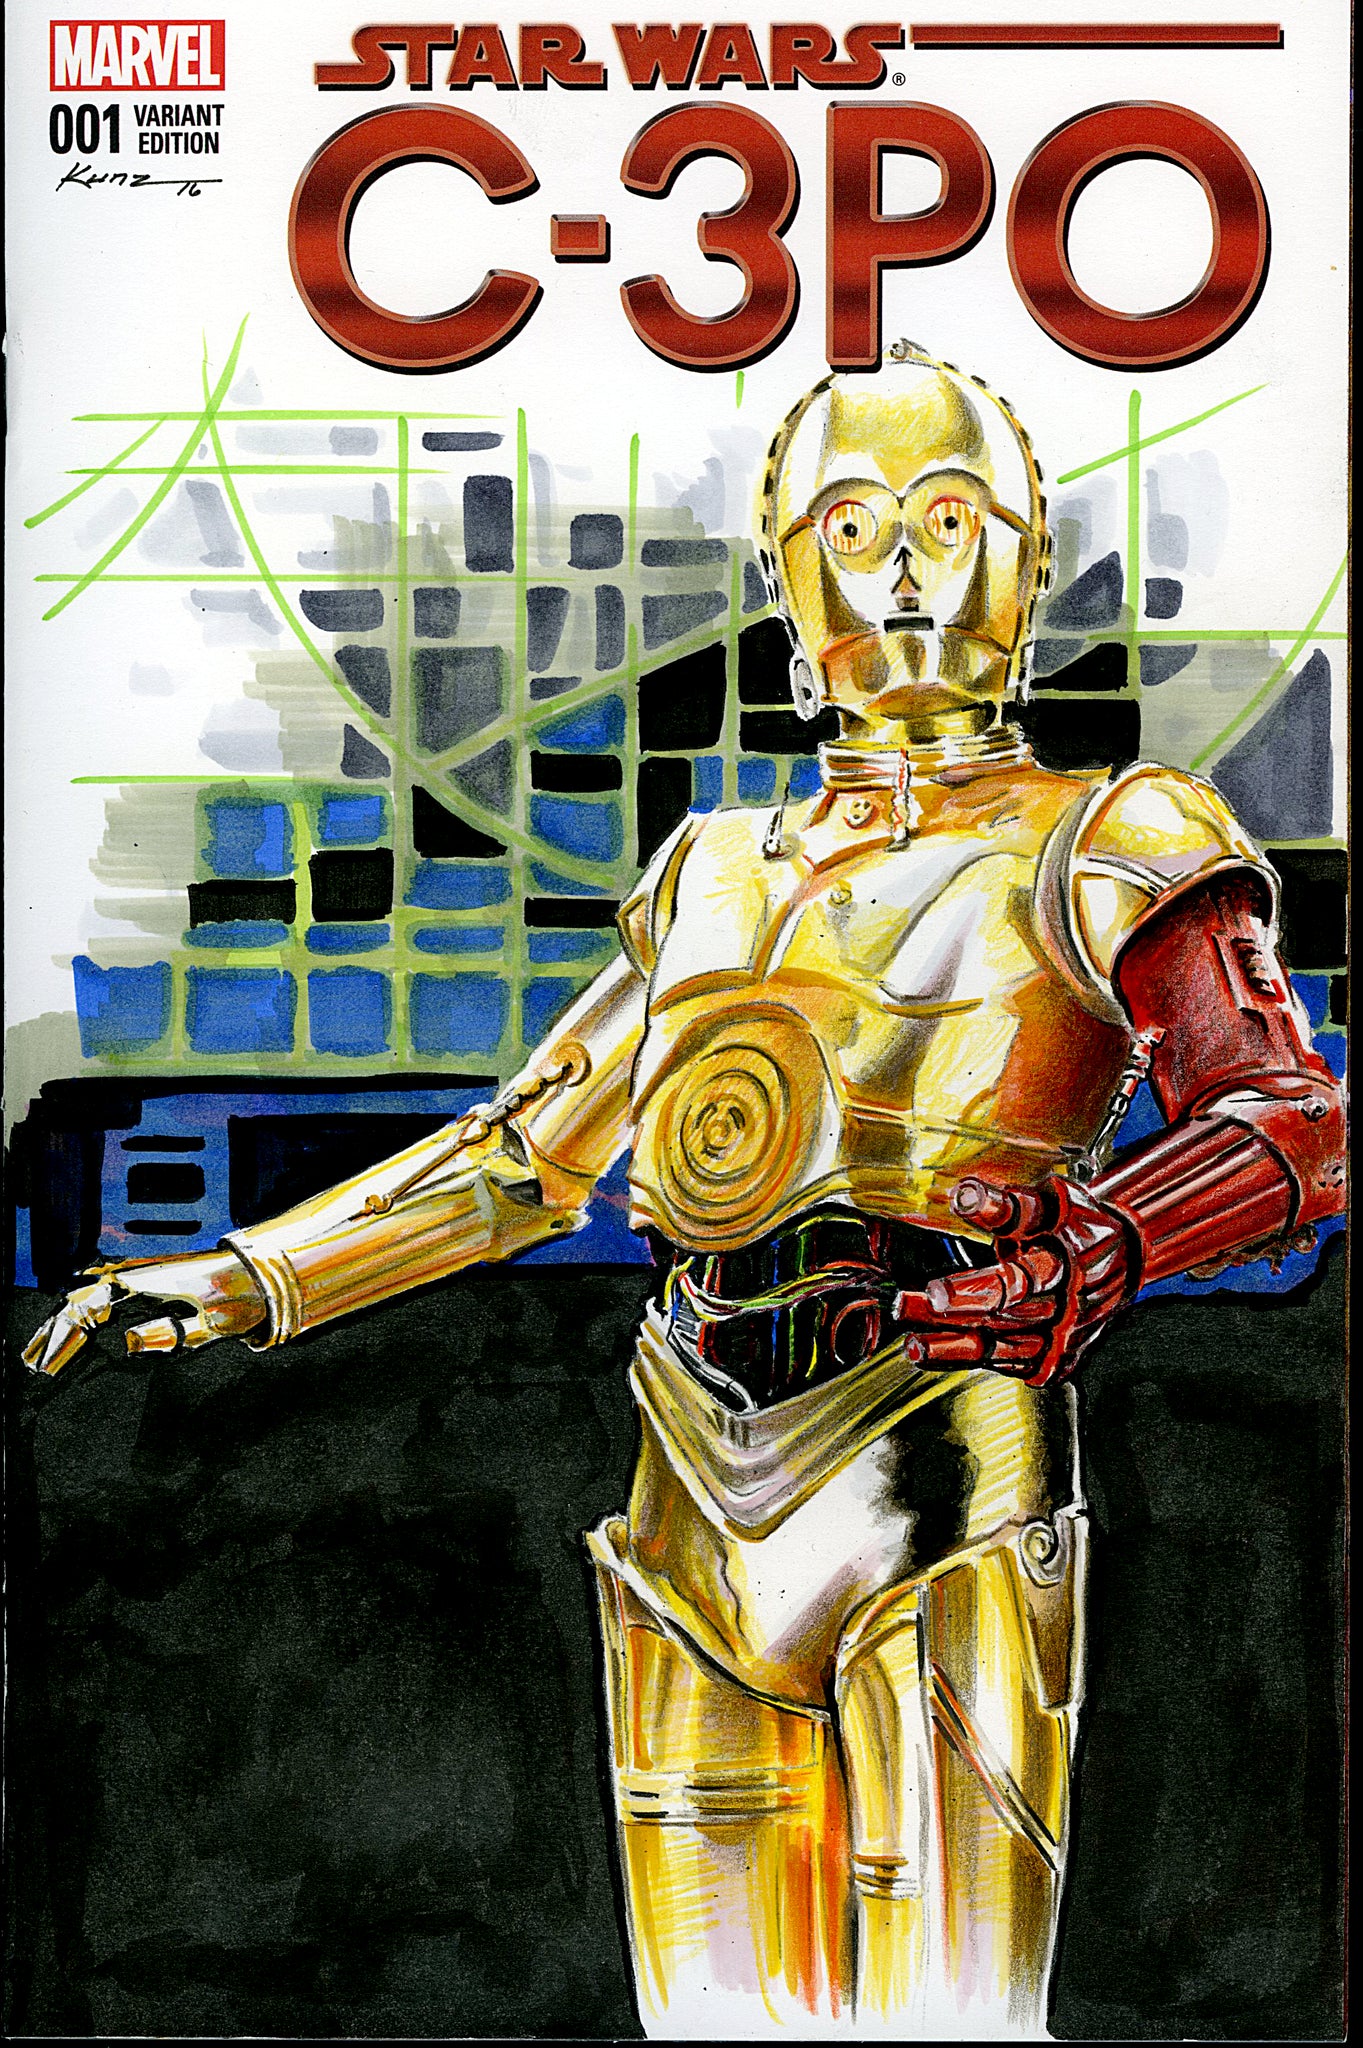 Original 1/1 Blank Cover Sketch "3PO"